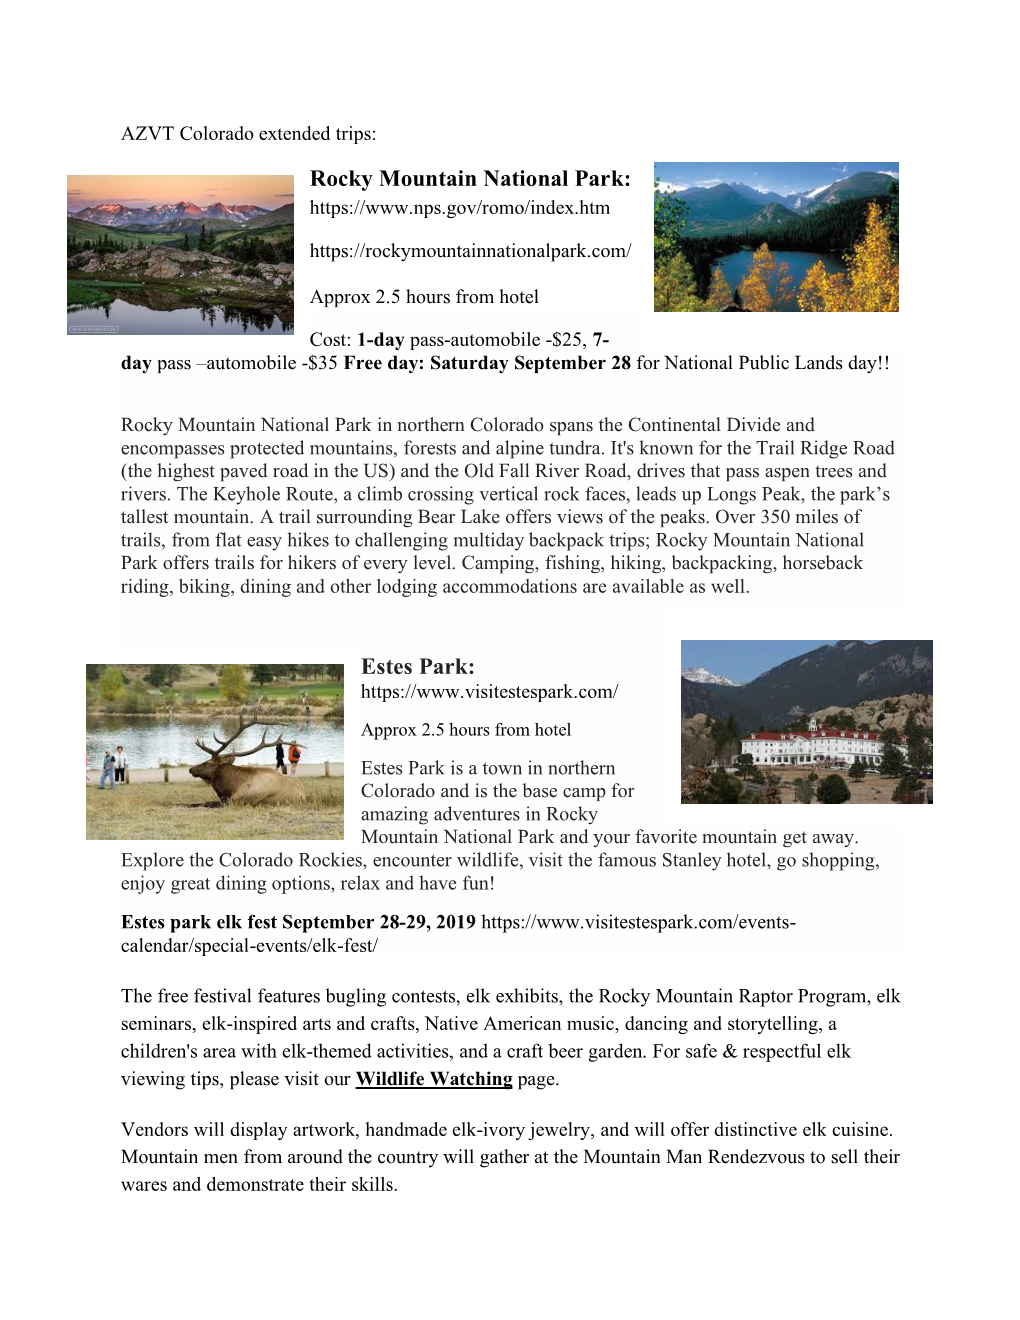 Rocky Mountain National Park: Estes Park